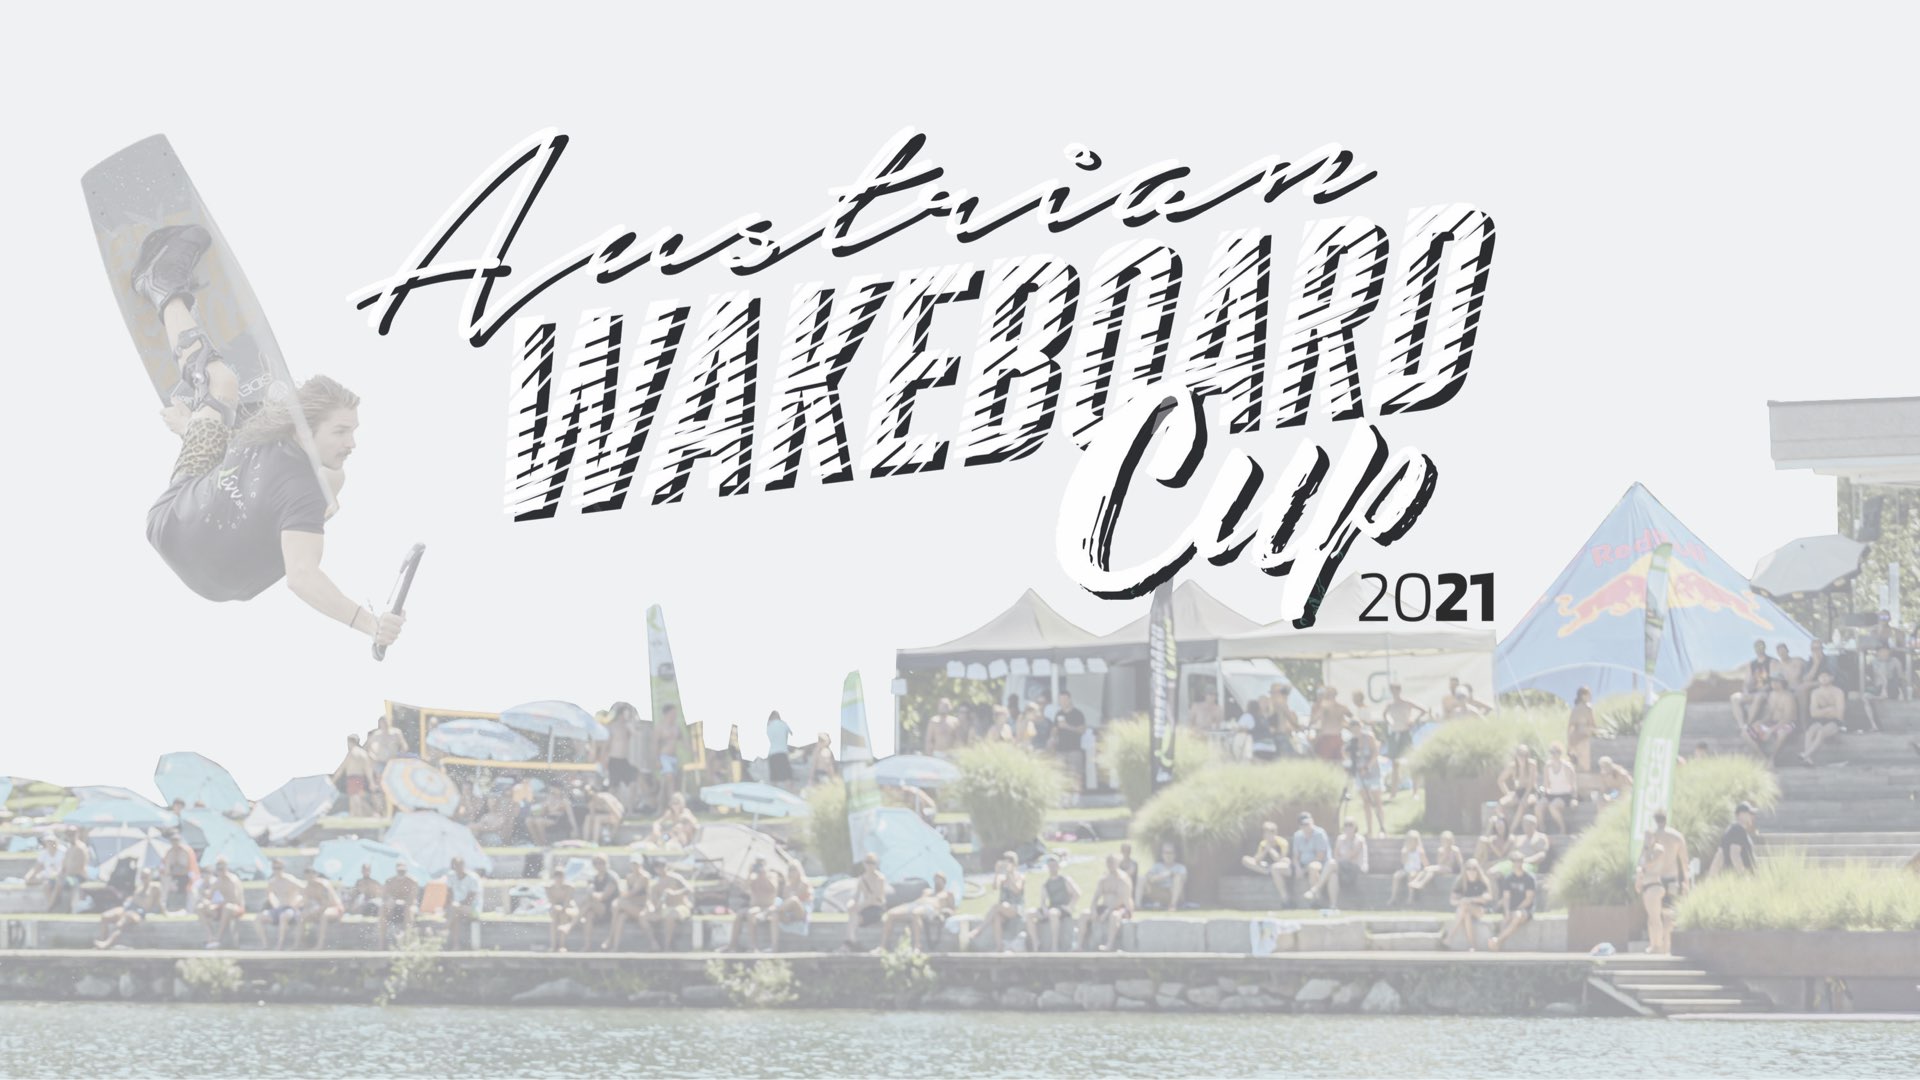 Austrian Wakeboard Cup 2.0: #1 Best Grab (Boat)